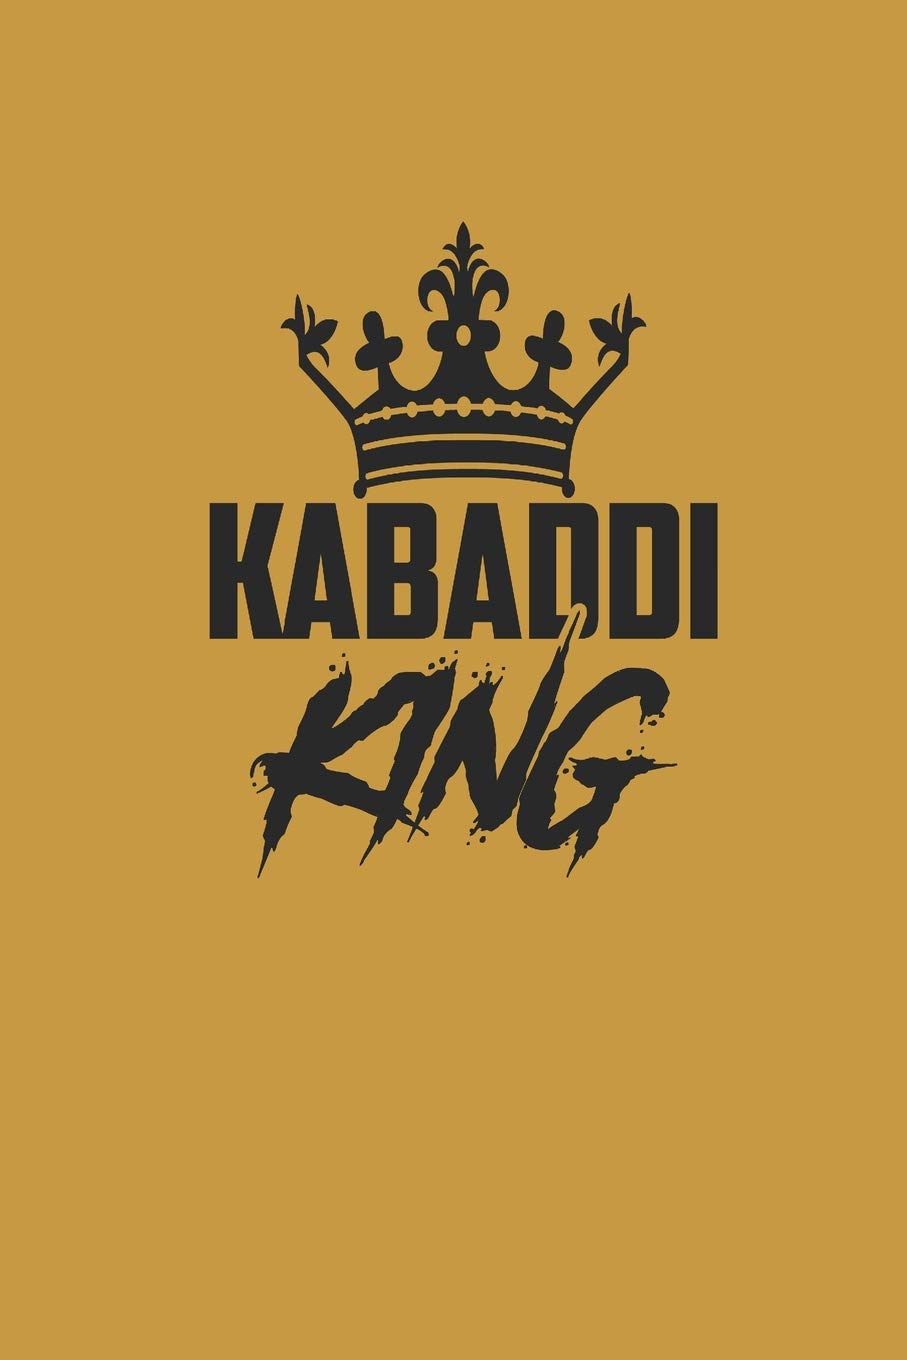 KABADDI KING: NOTIZBUCH Journal 6x9 Notebook lined: Sumball, Pete: 9781798292020: Books